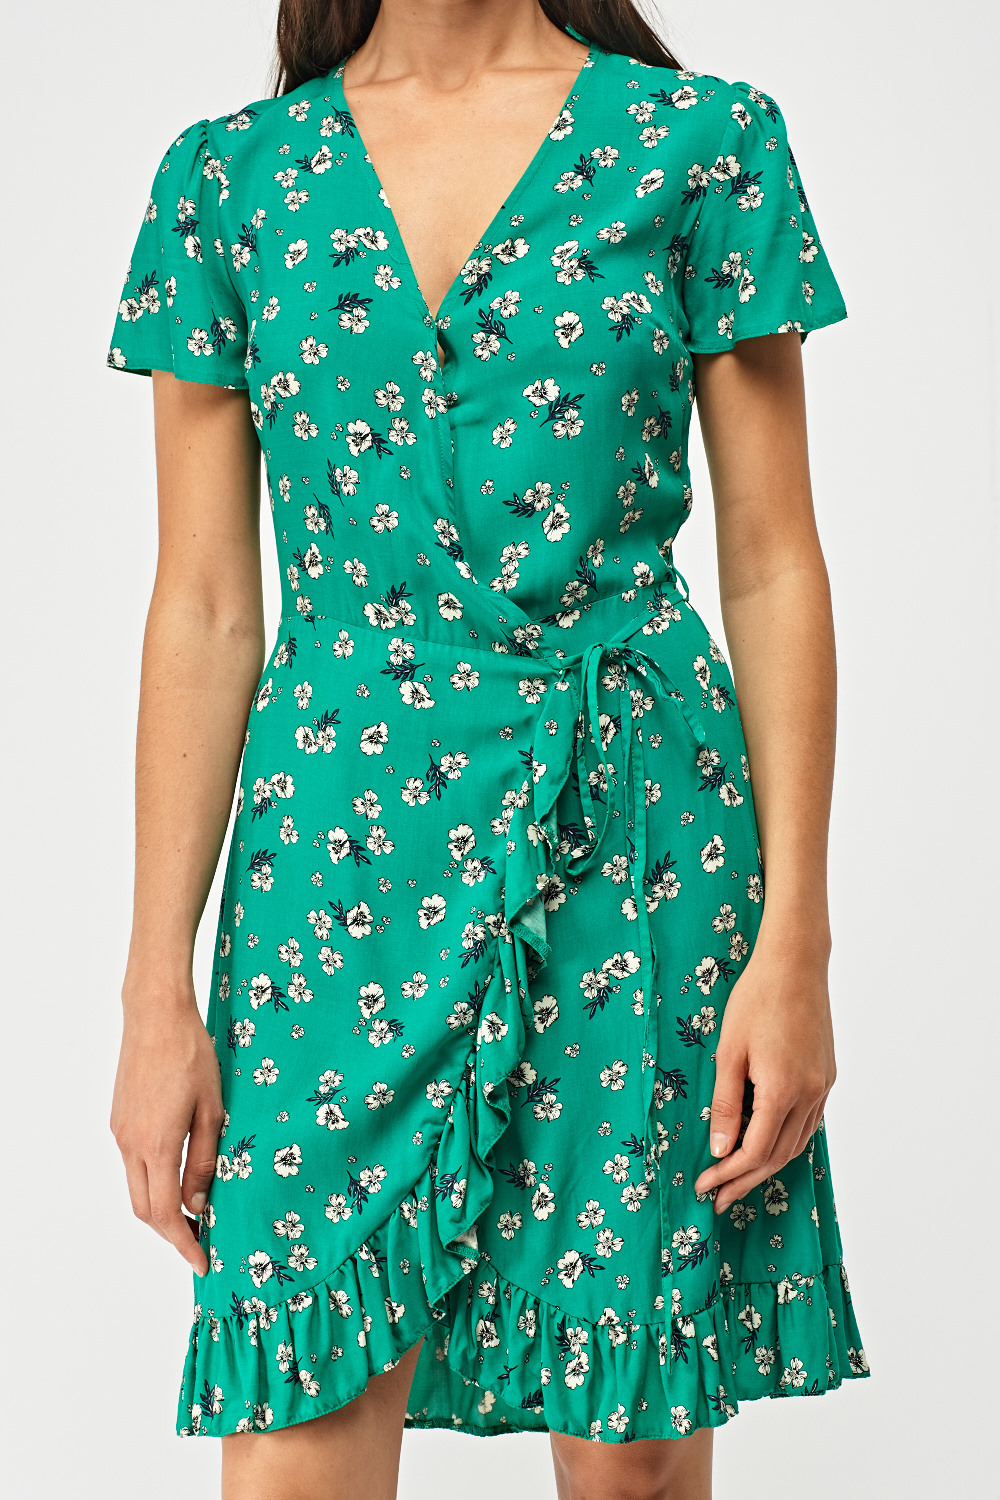 Flower Print Wrap Tea Dress - Just $6